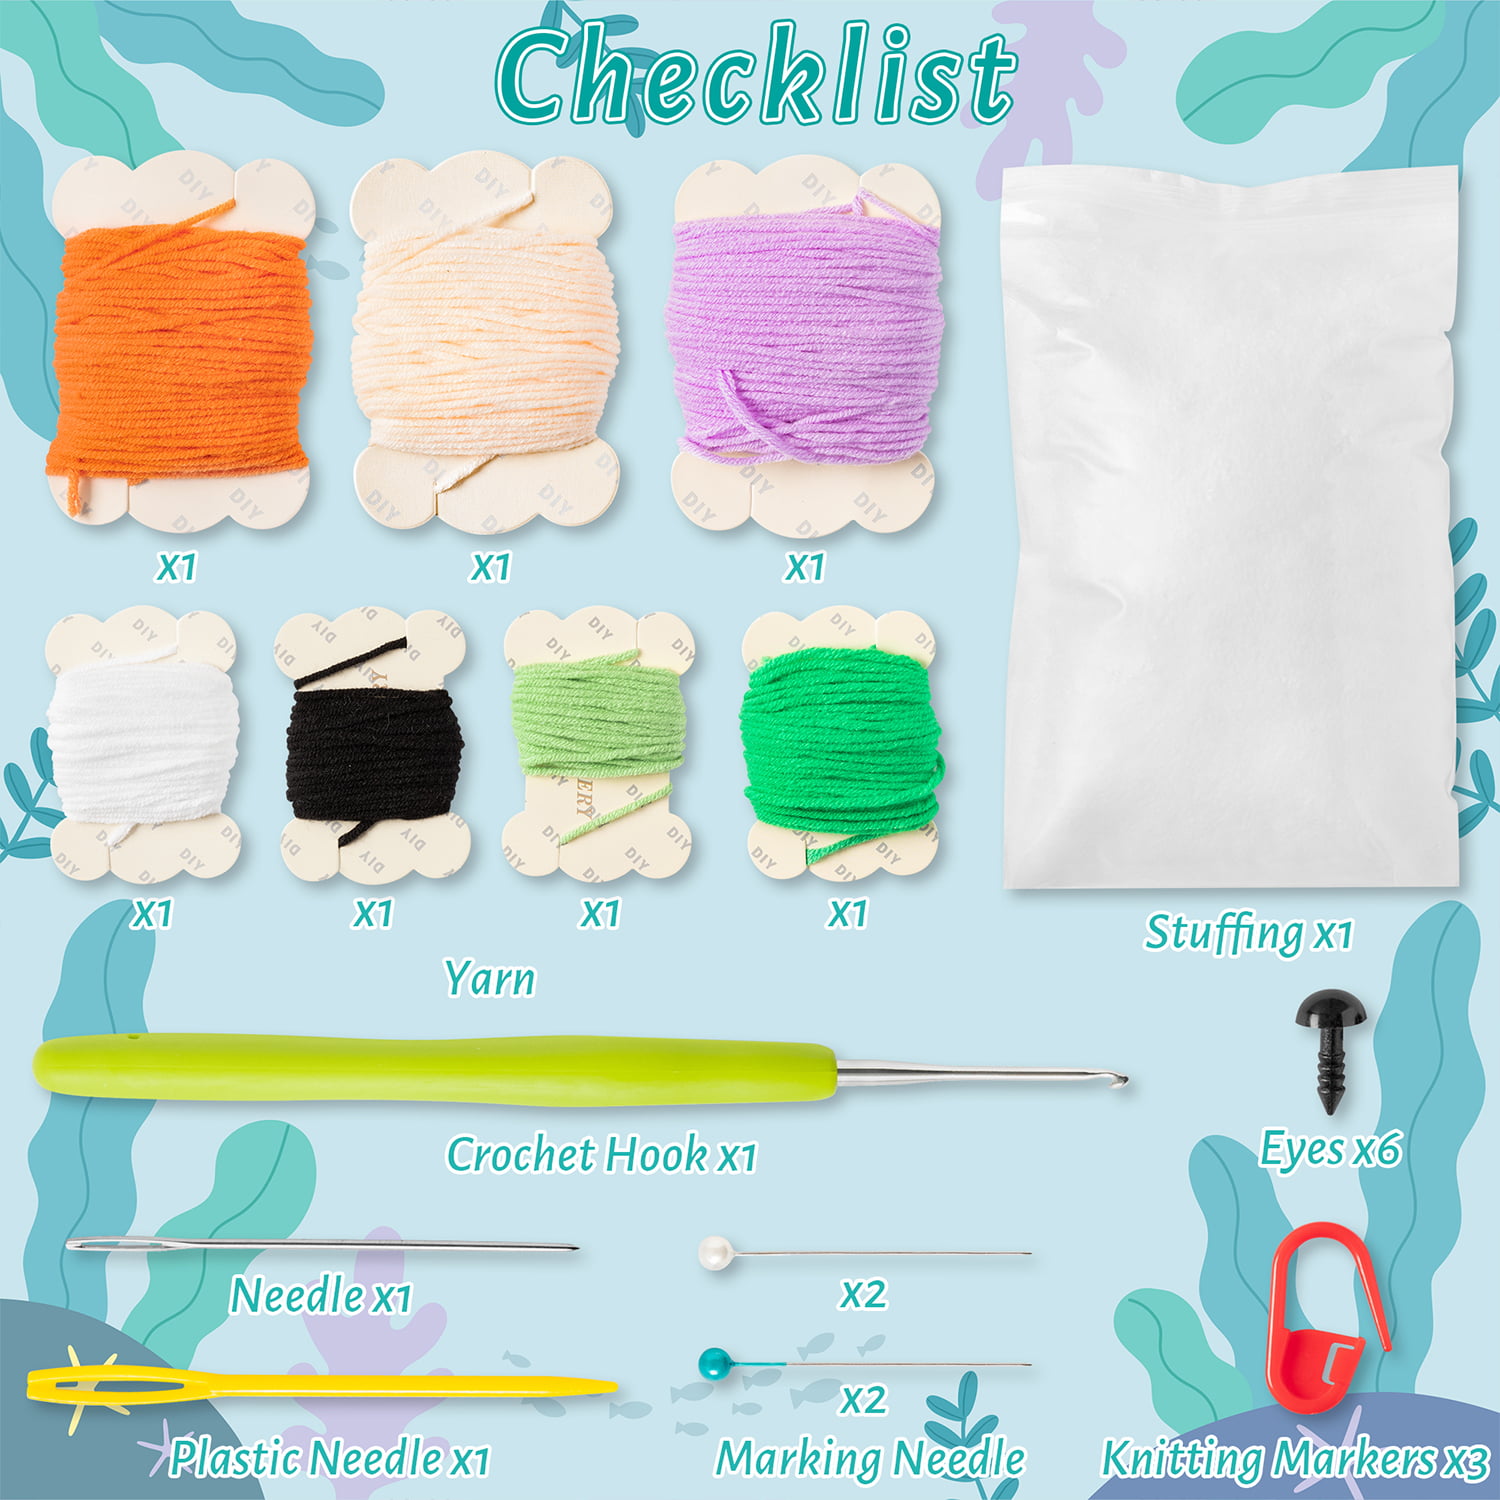 BWkoss Beginner Crochet Kit for Adults Kids DIY Unicorns Craft